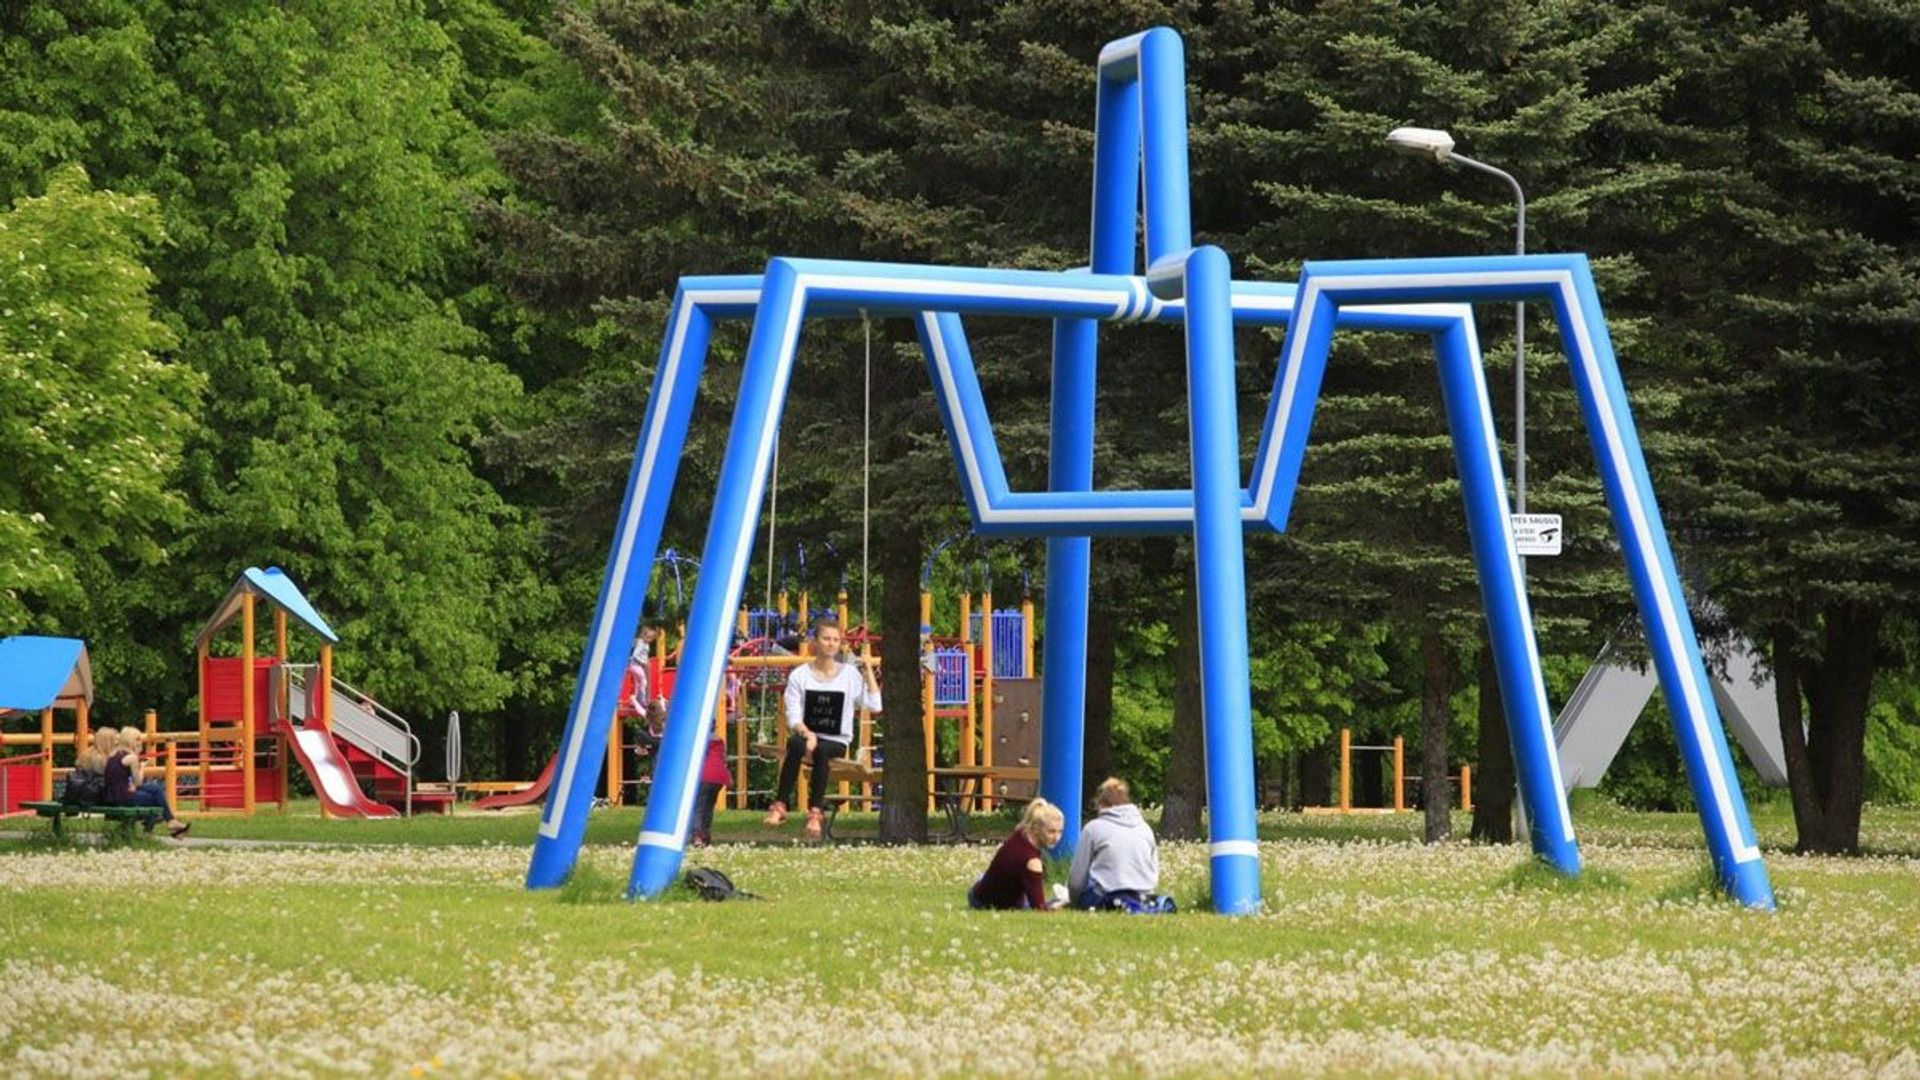 Alytus Youth Park